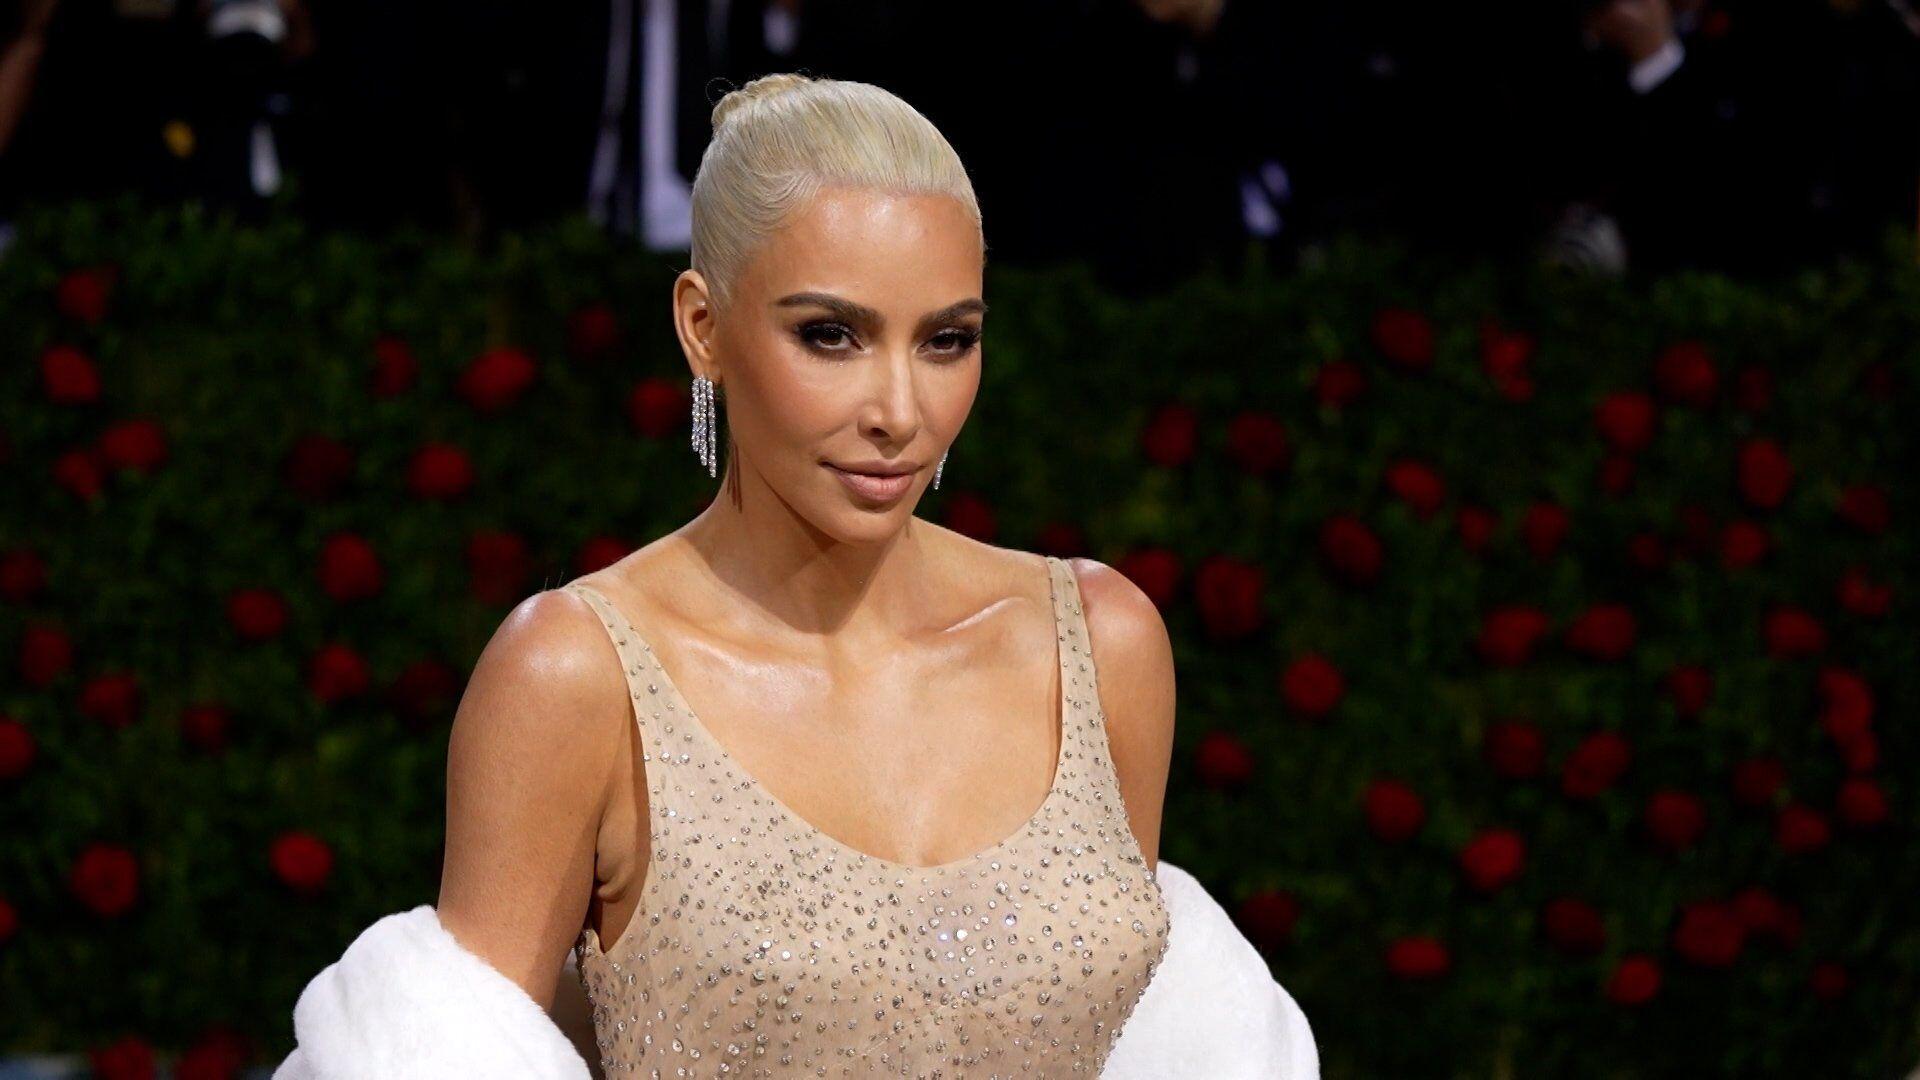 Kim Kardashian Declines Balenciaga Offer, Swaps Outfits For Events